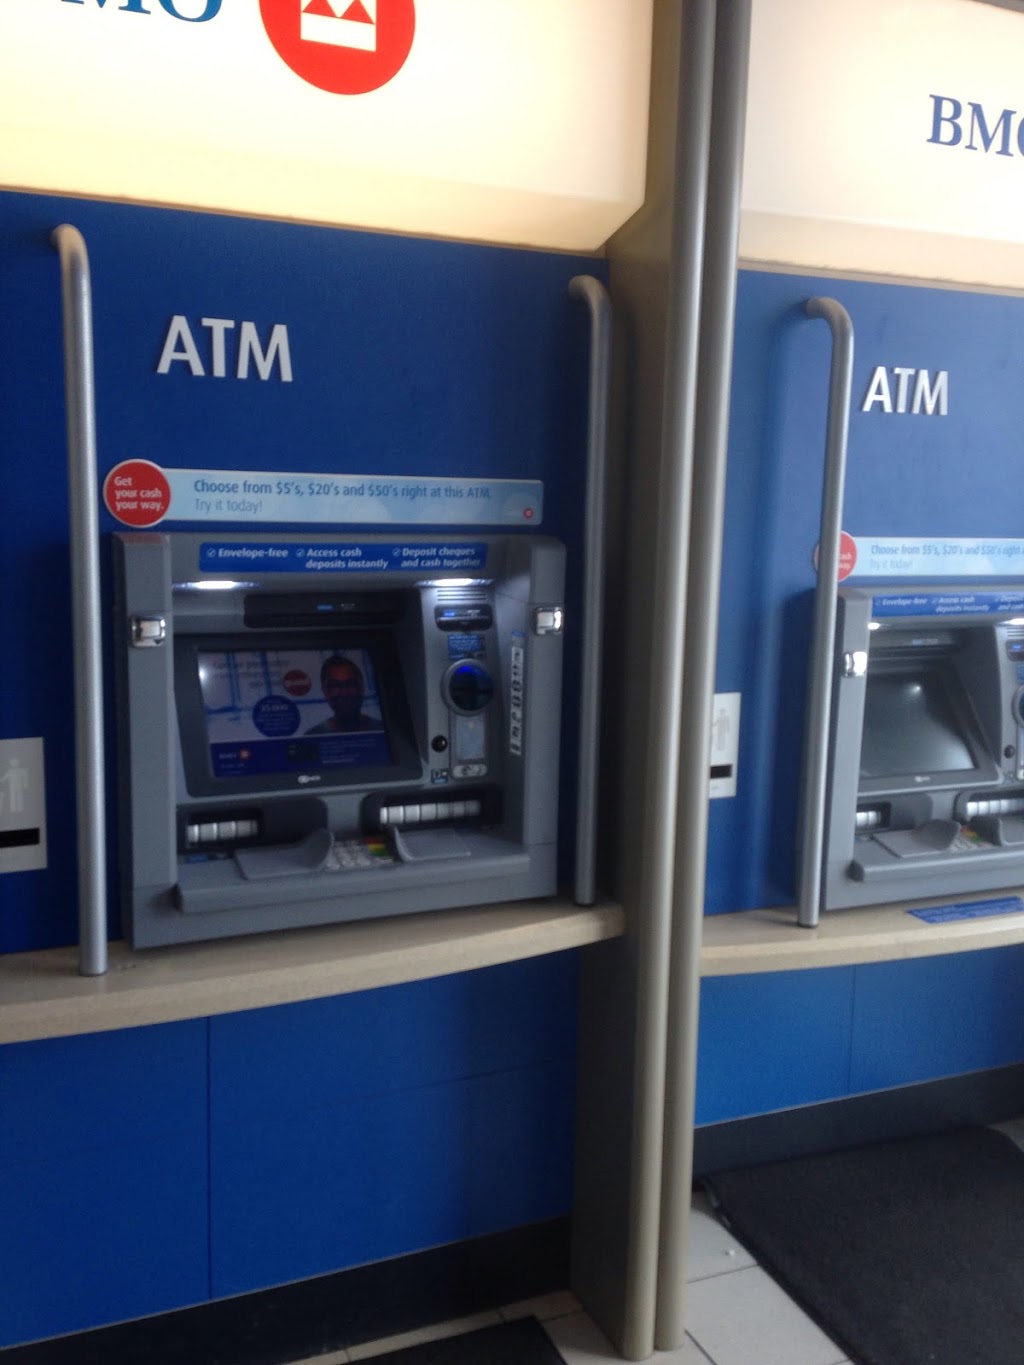 ATM and Bank in Bradenton, FL – BMO